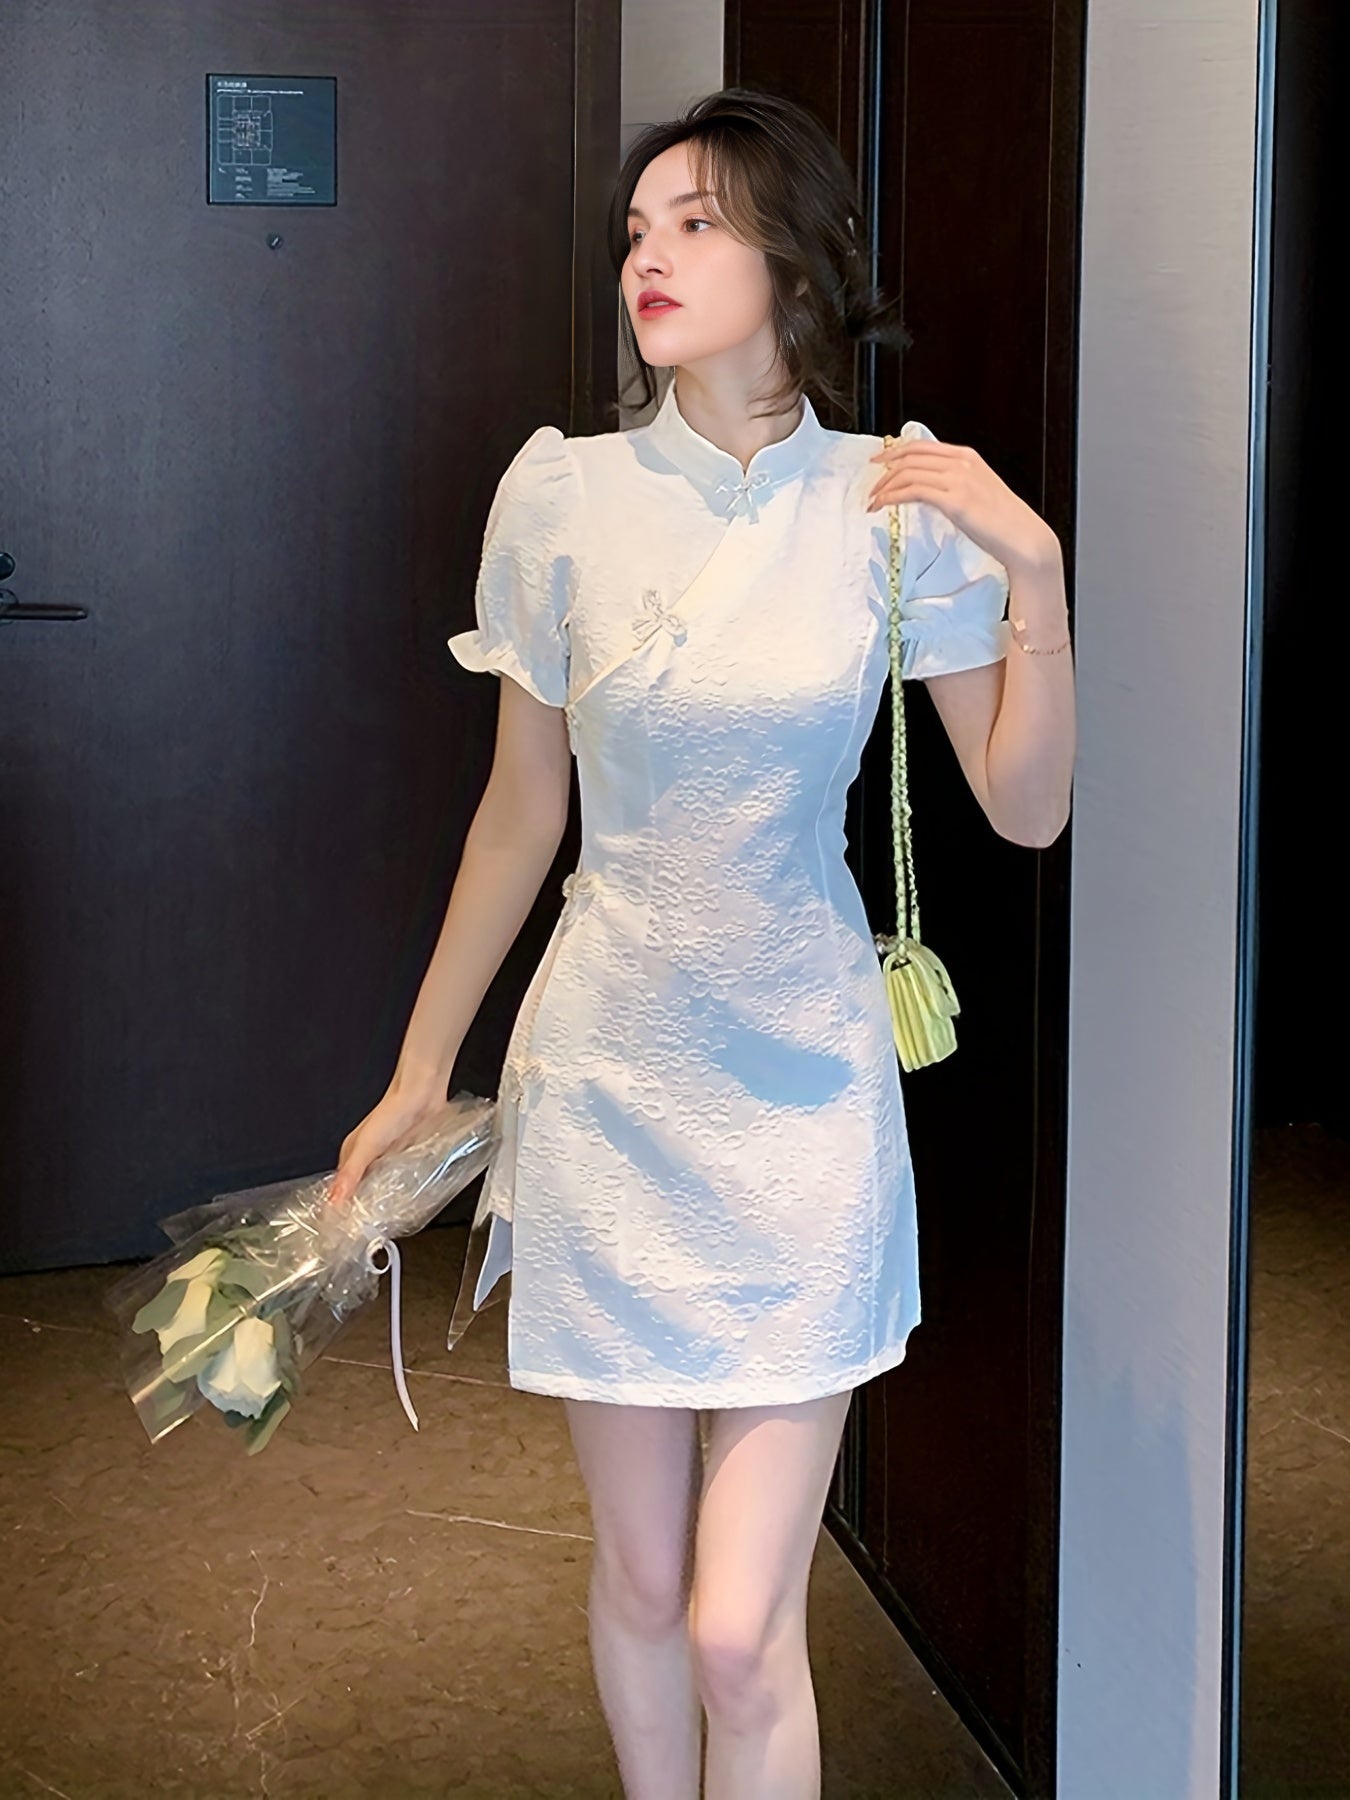 VzyzvRuffle Trim Solid Cheongsam Dress, Elegant Short Sleeve Stand Collar Bodycon Qipao Dress, Women's Clothing